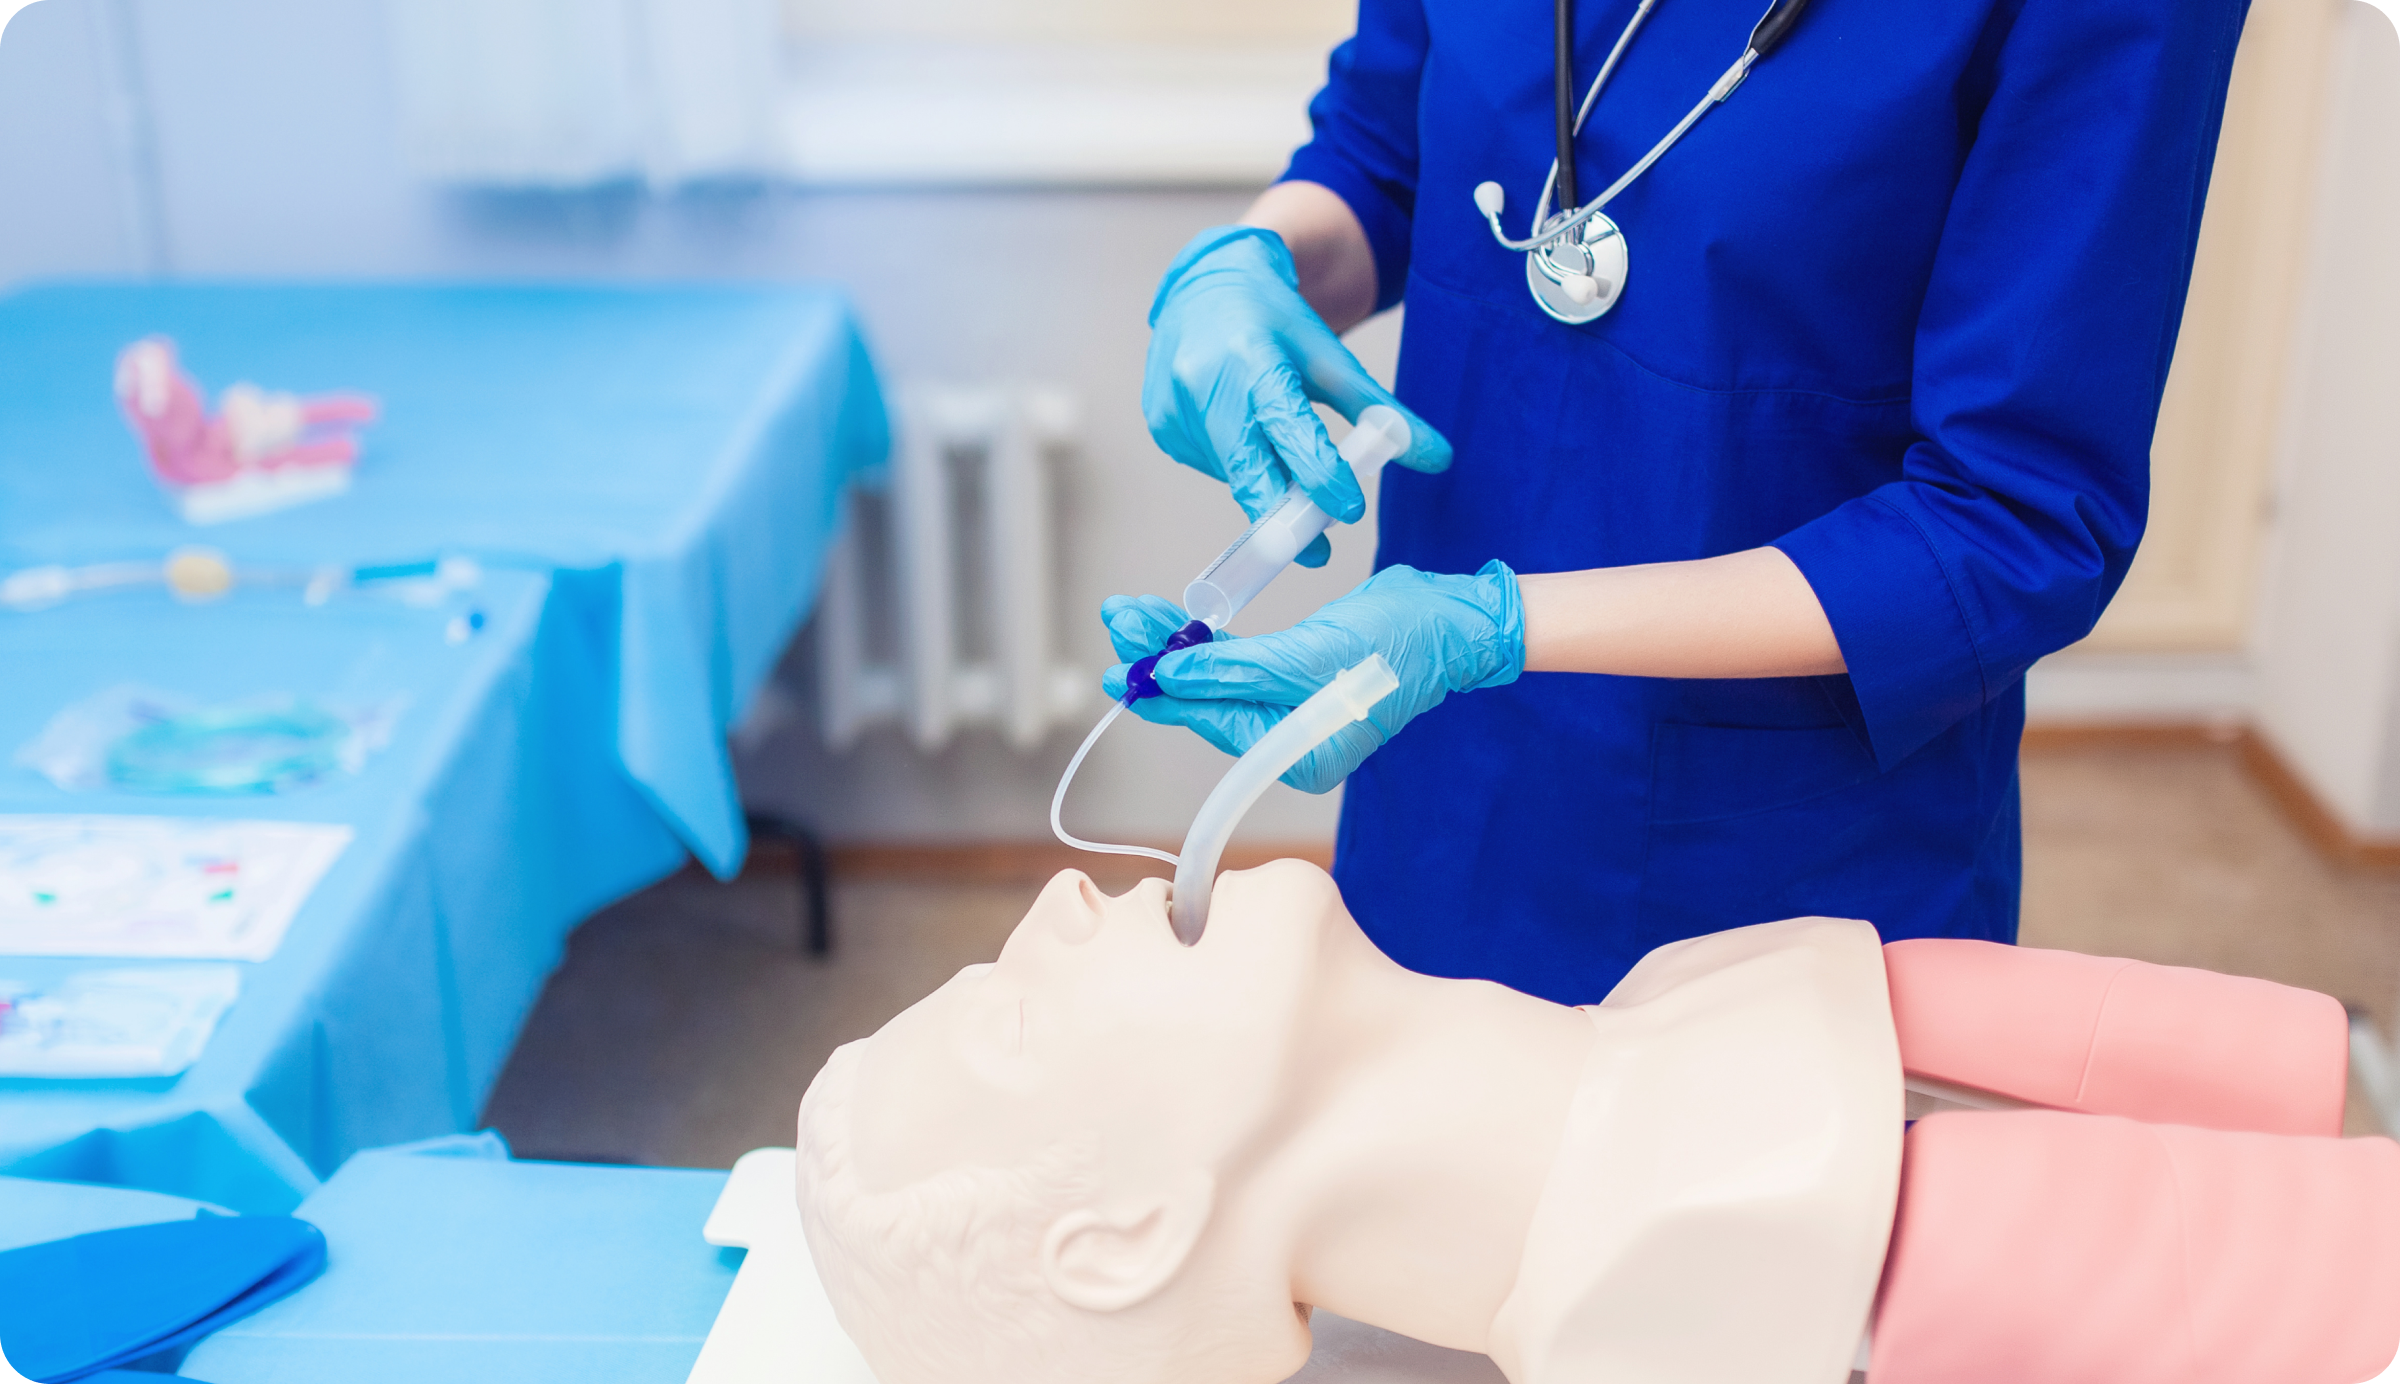 Does Your Nursing Simulation Meet Current Regulations?